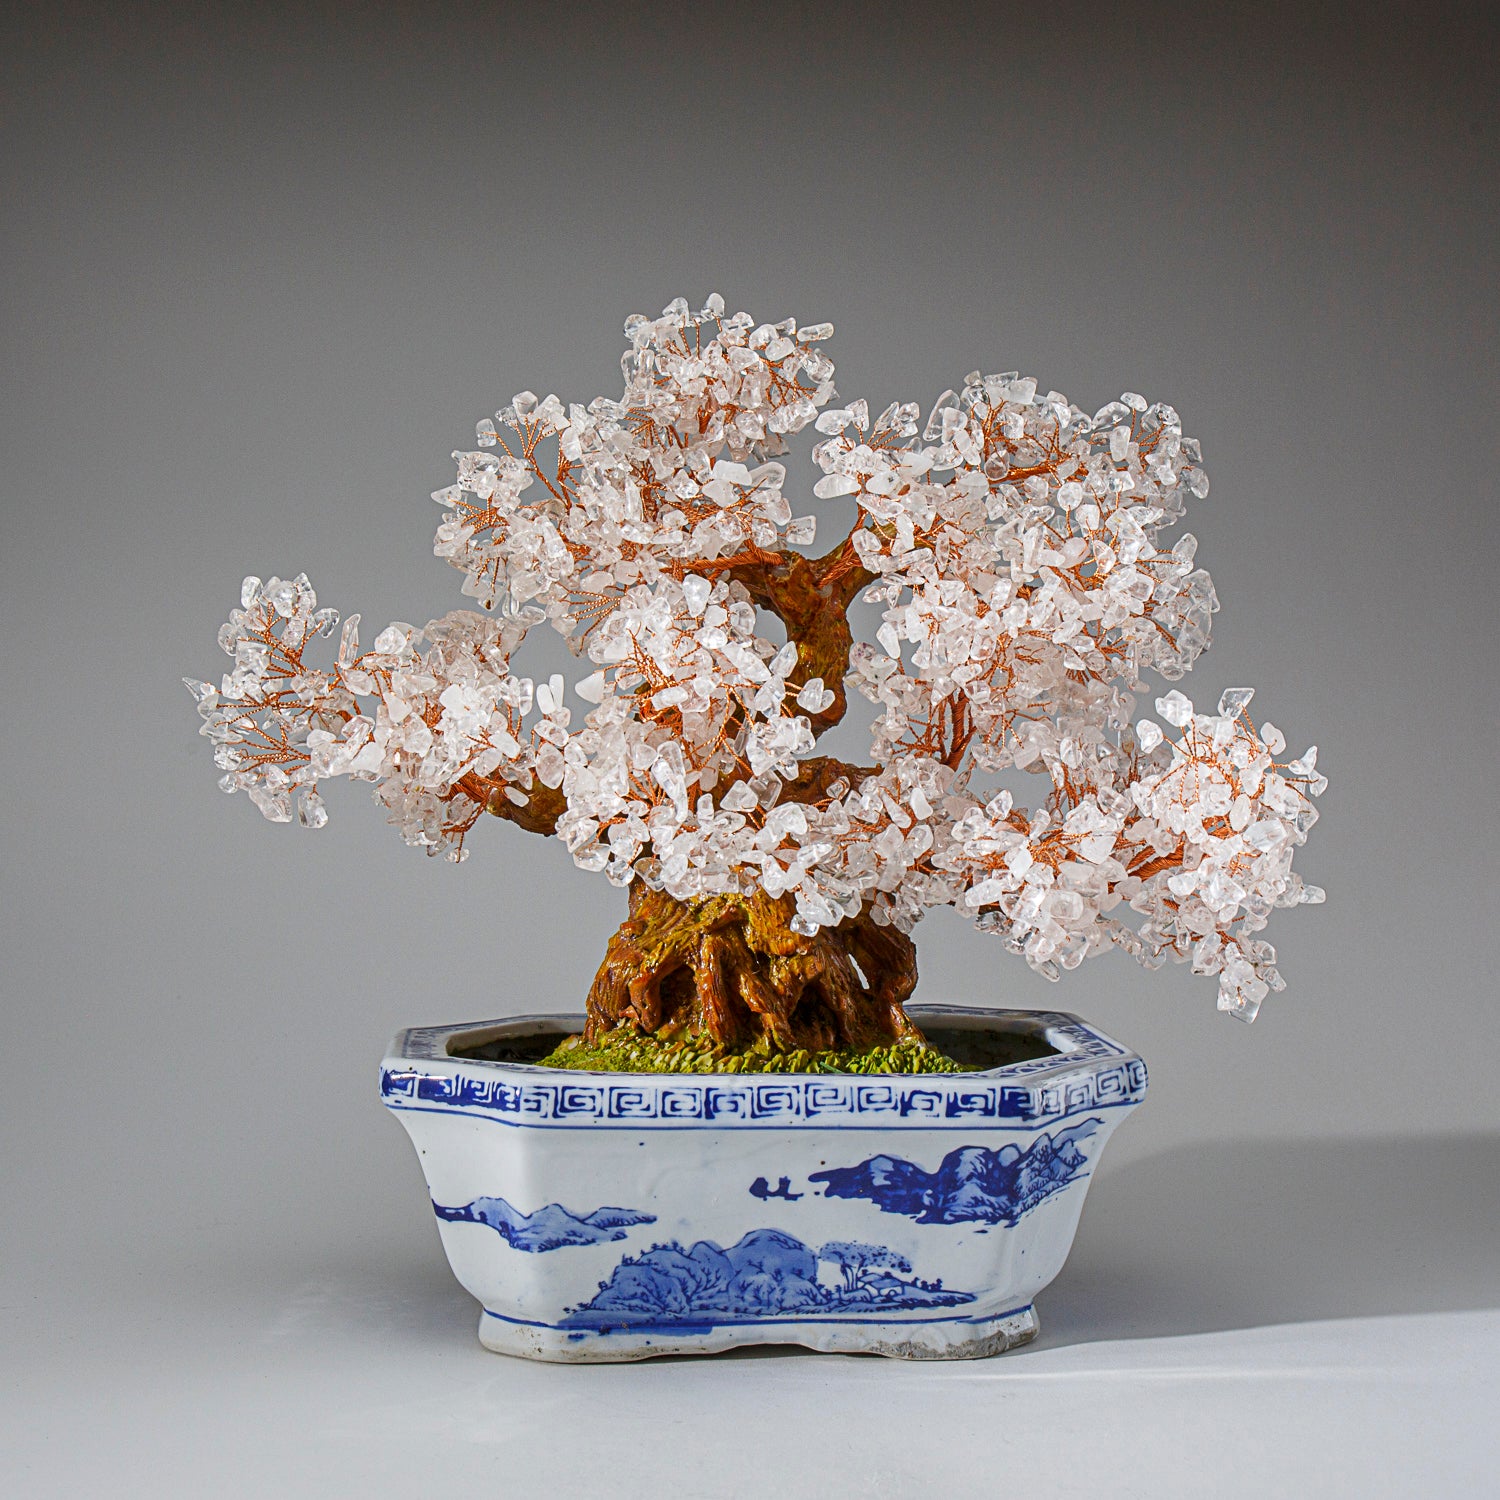 Genuine Quartz Gemstone Bonsai Tree in Oval Ceramic Pot (12” Tall)